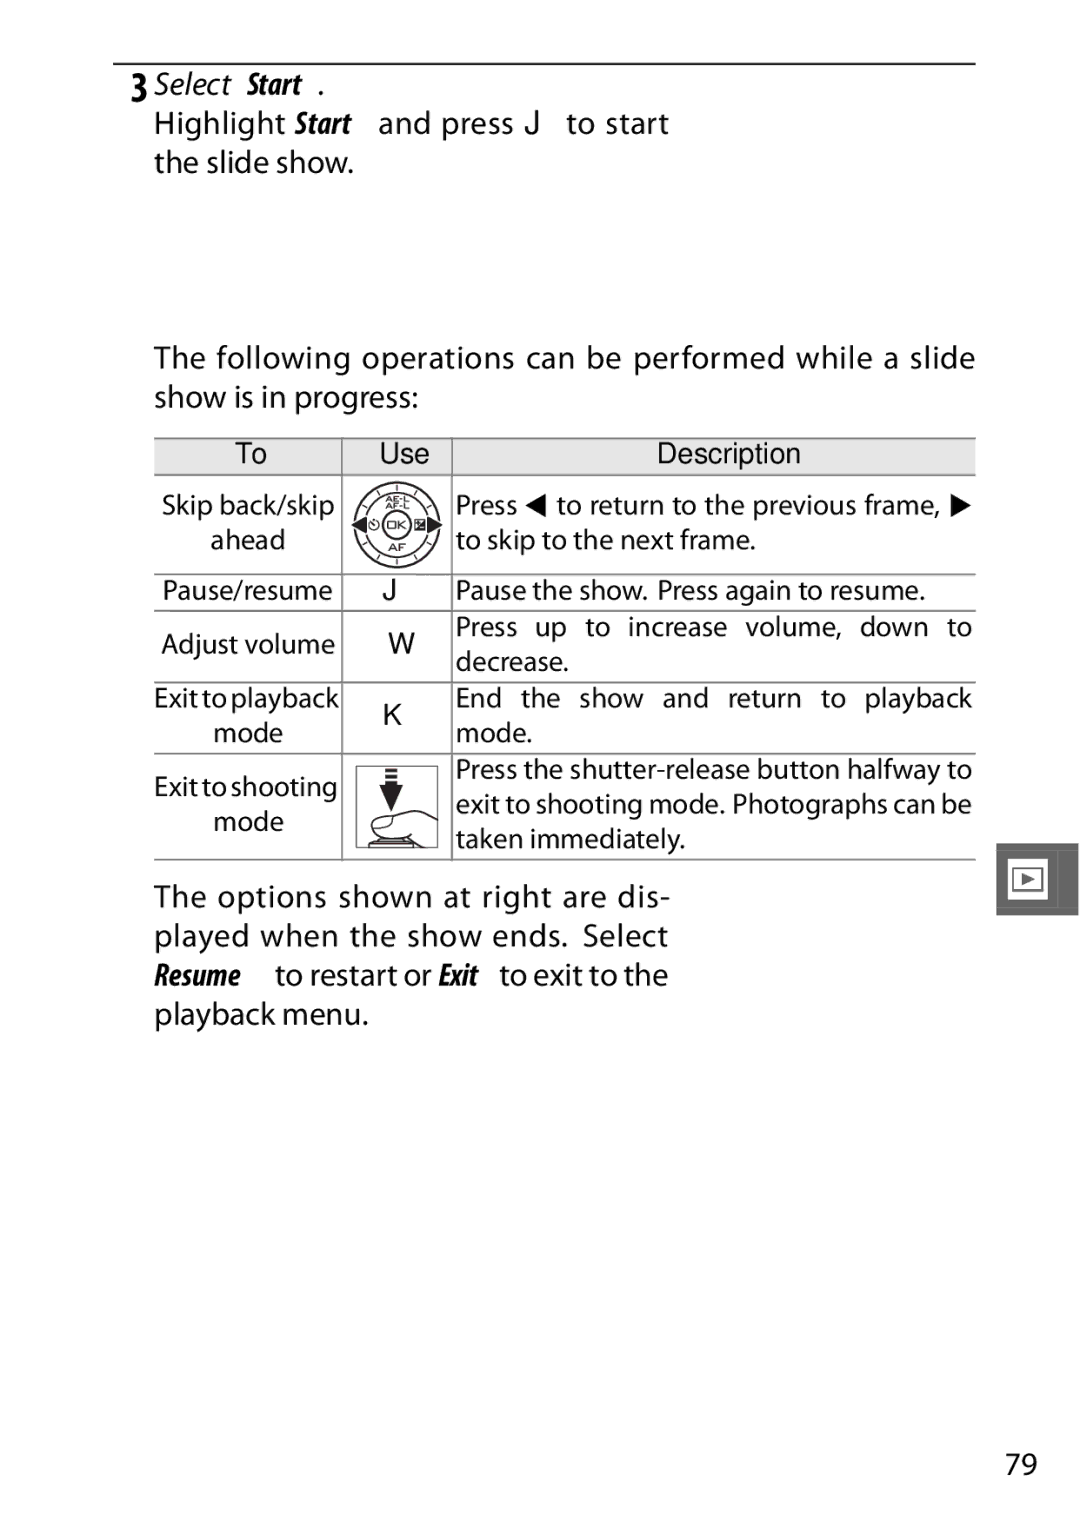 Nikon V1 manual Select Start, Options shown at right are dis, Use Description 